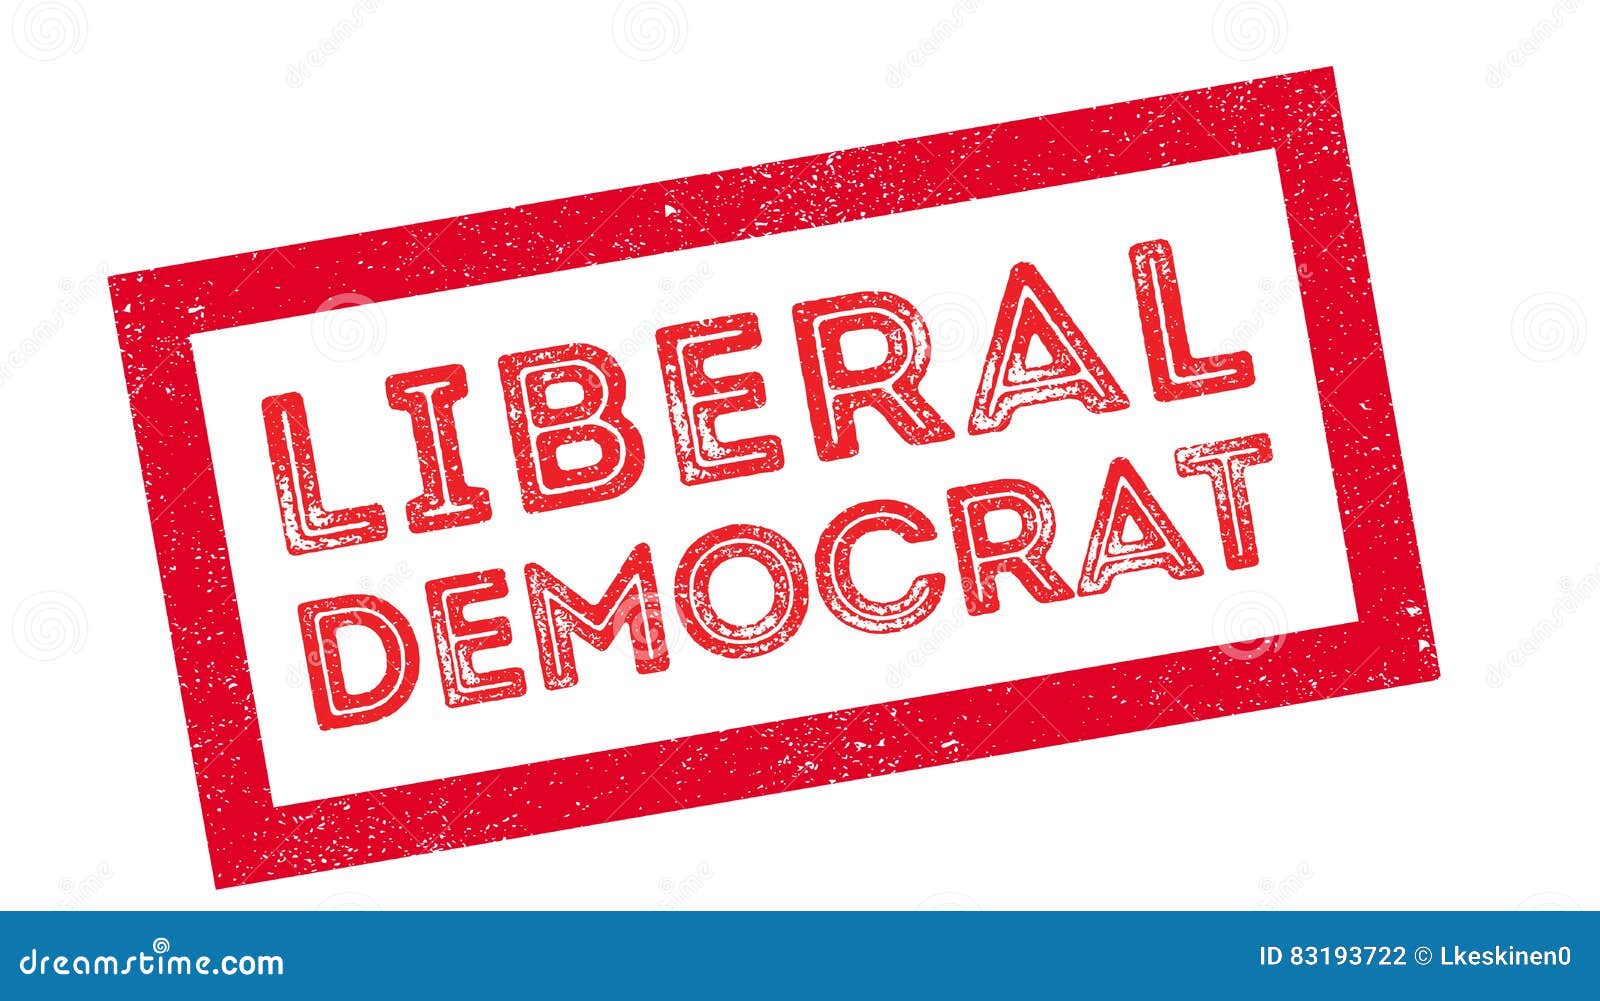 liberal democrat rubber stamp